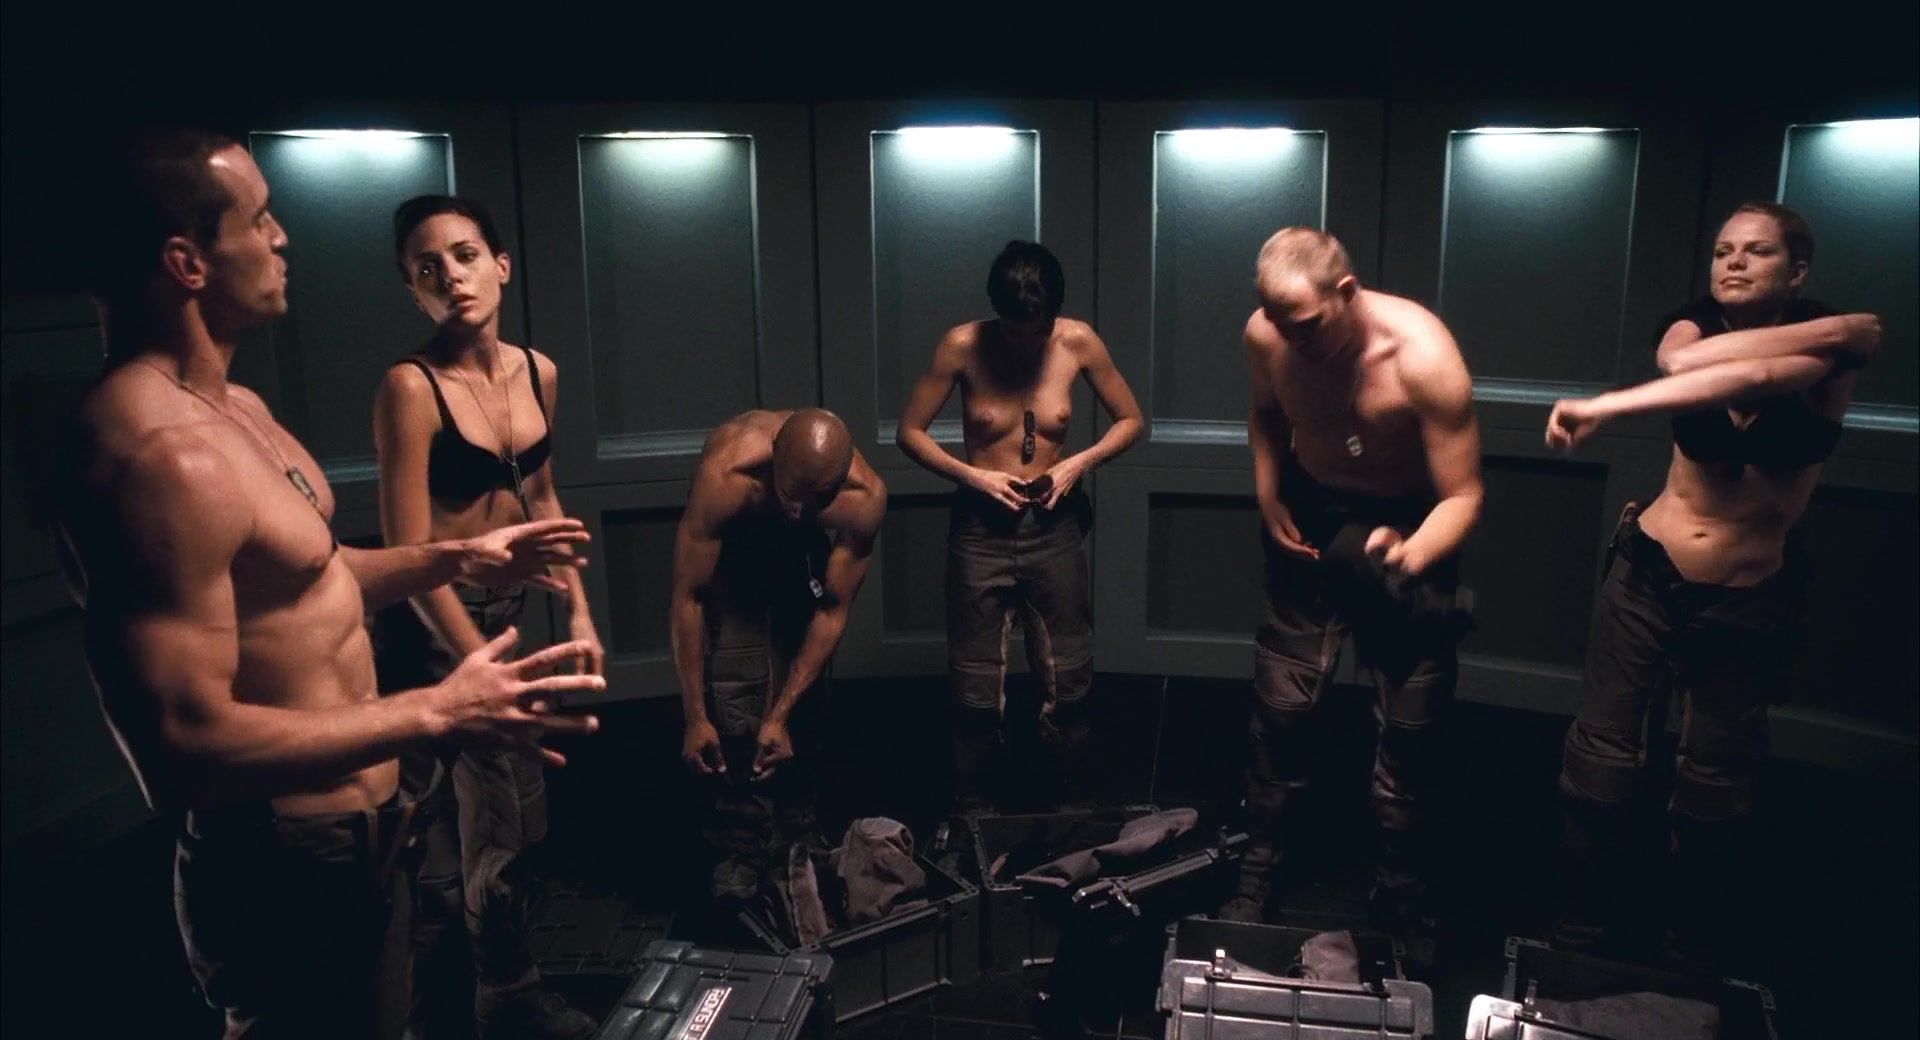 CzechGAV Nudity Video | Cecile Breccia, Tanya van Graan, Nicole Tupper - Starship Troopers 3 (2008) Hardcore Porn - 1